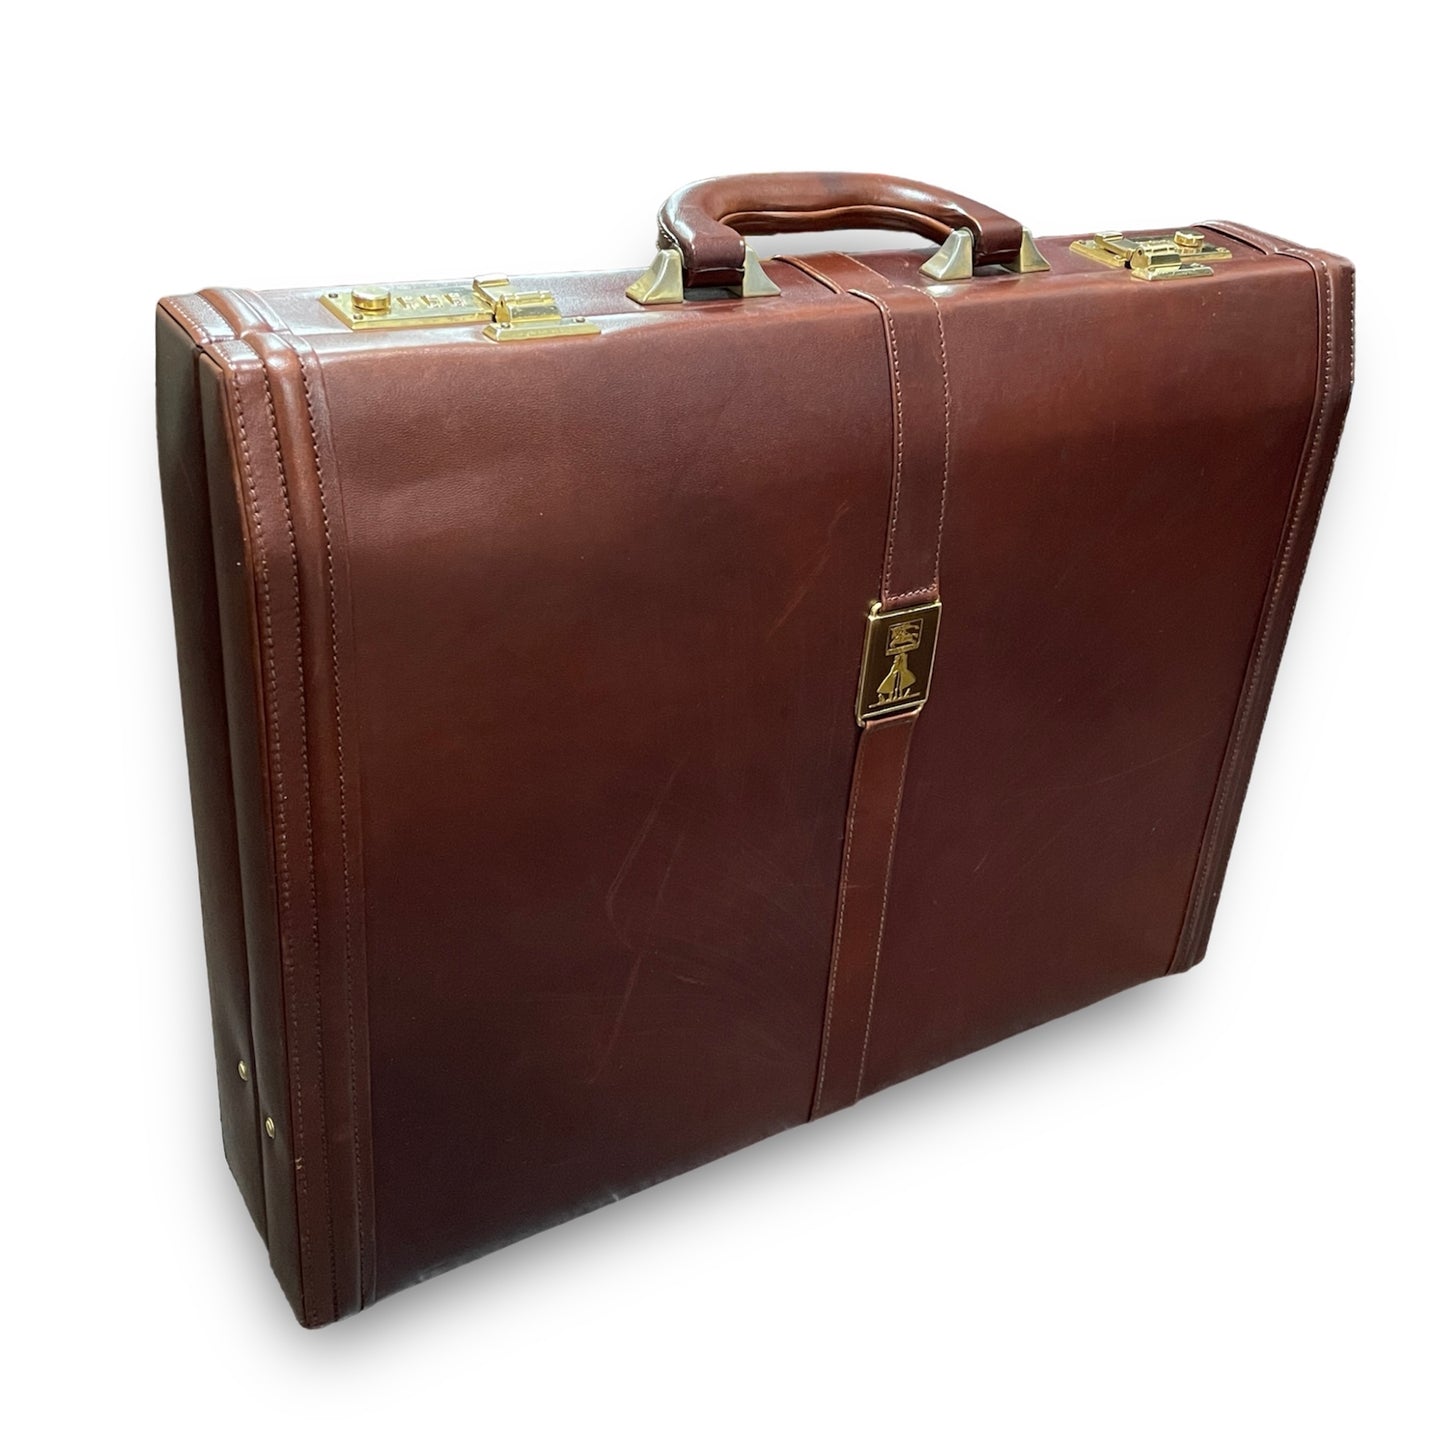 70-80s Burberrys leather case